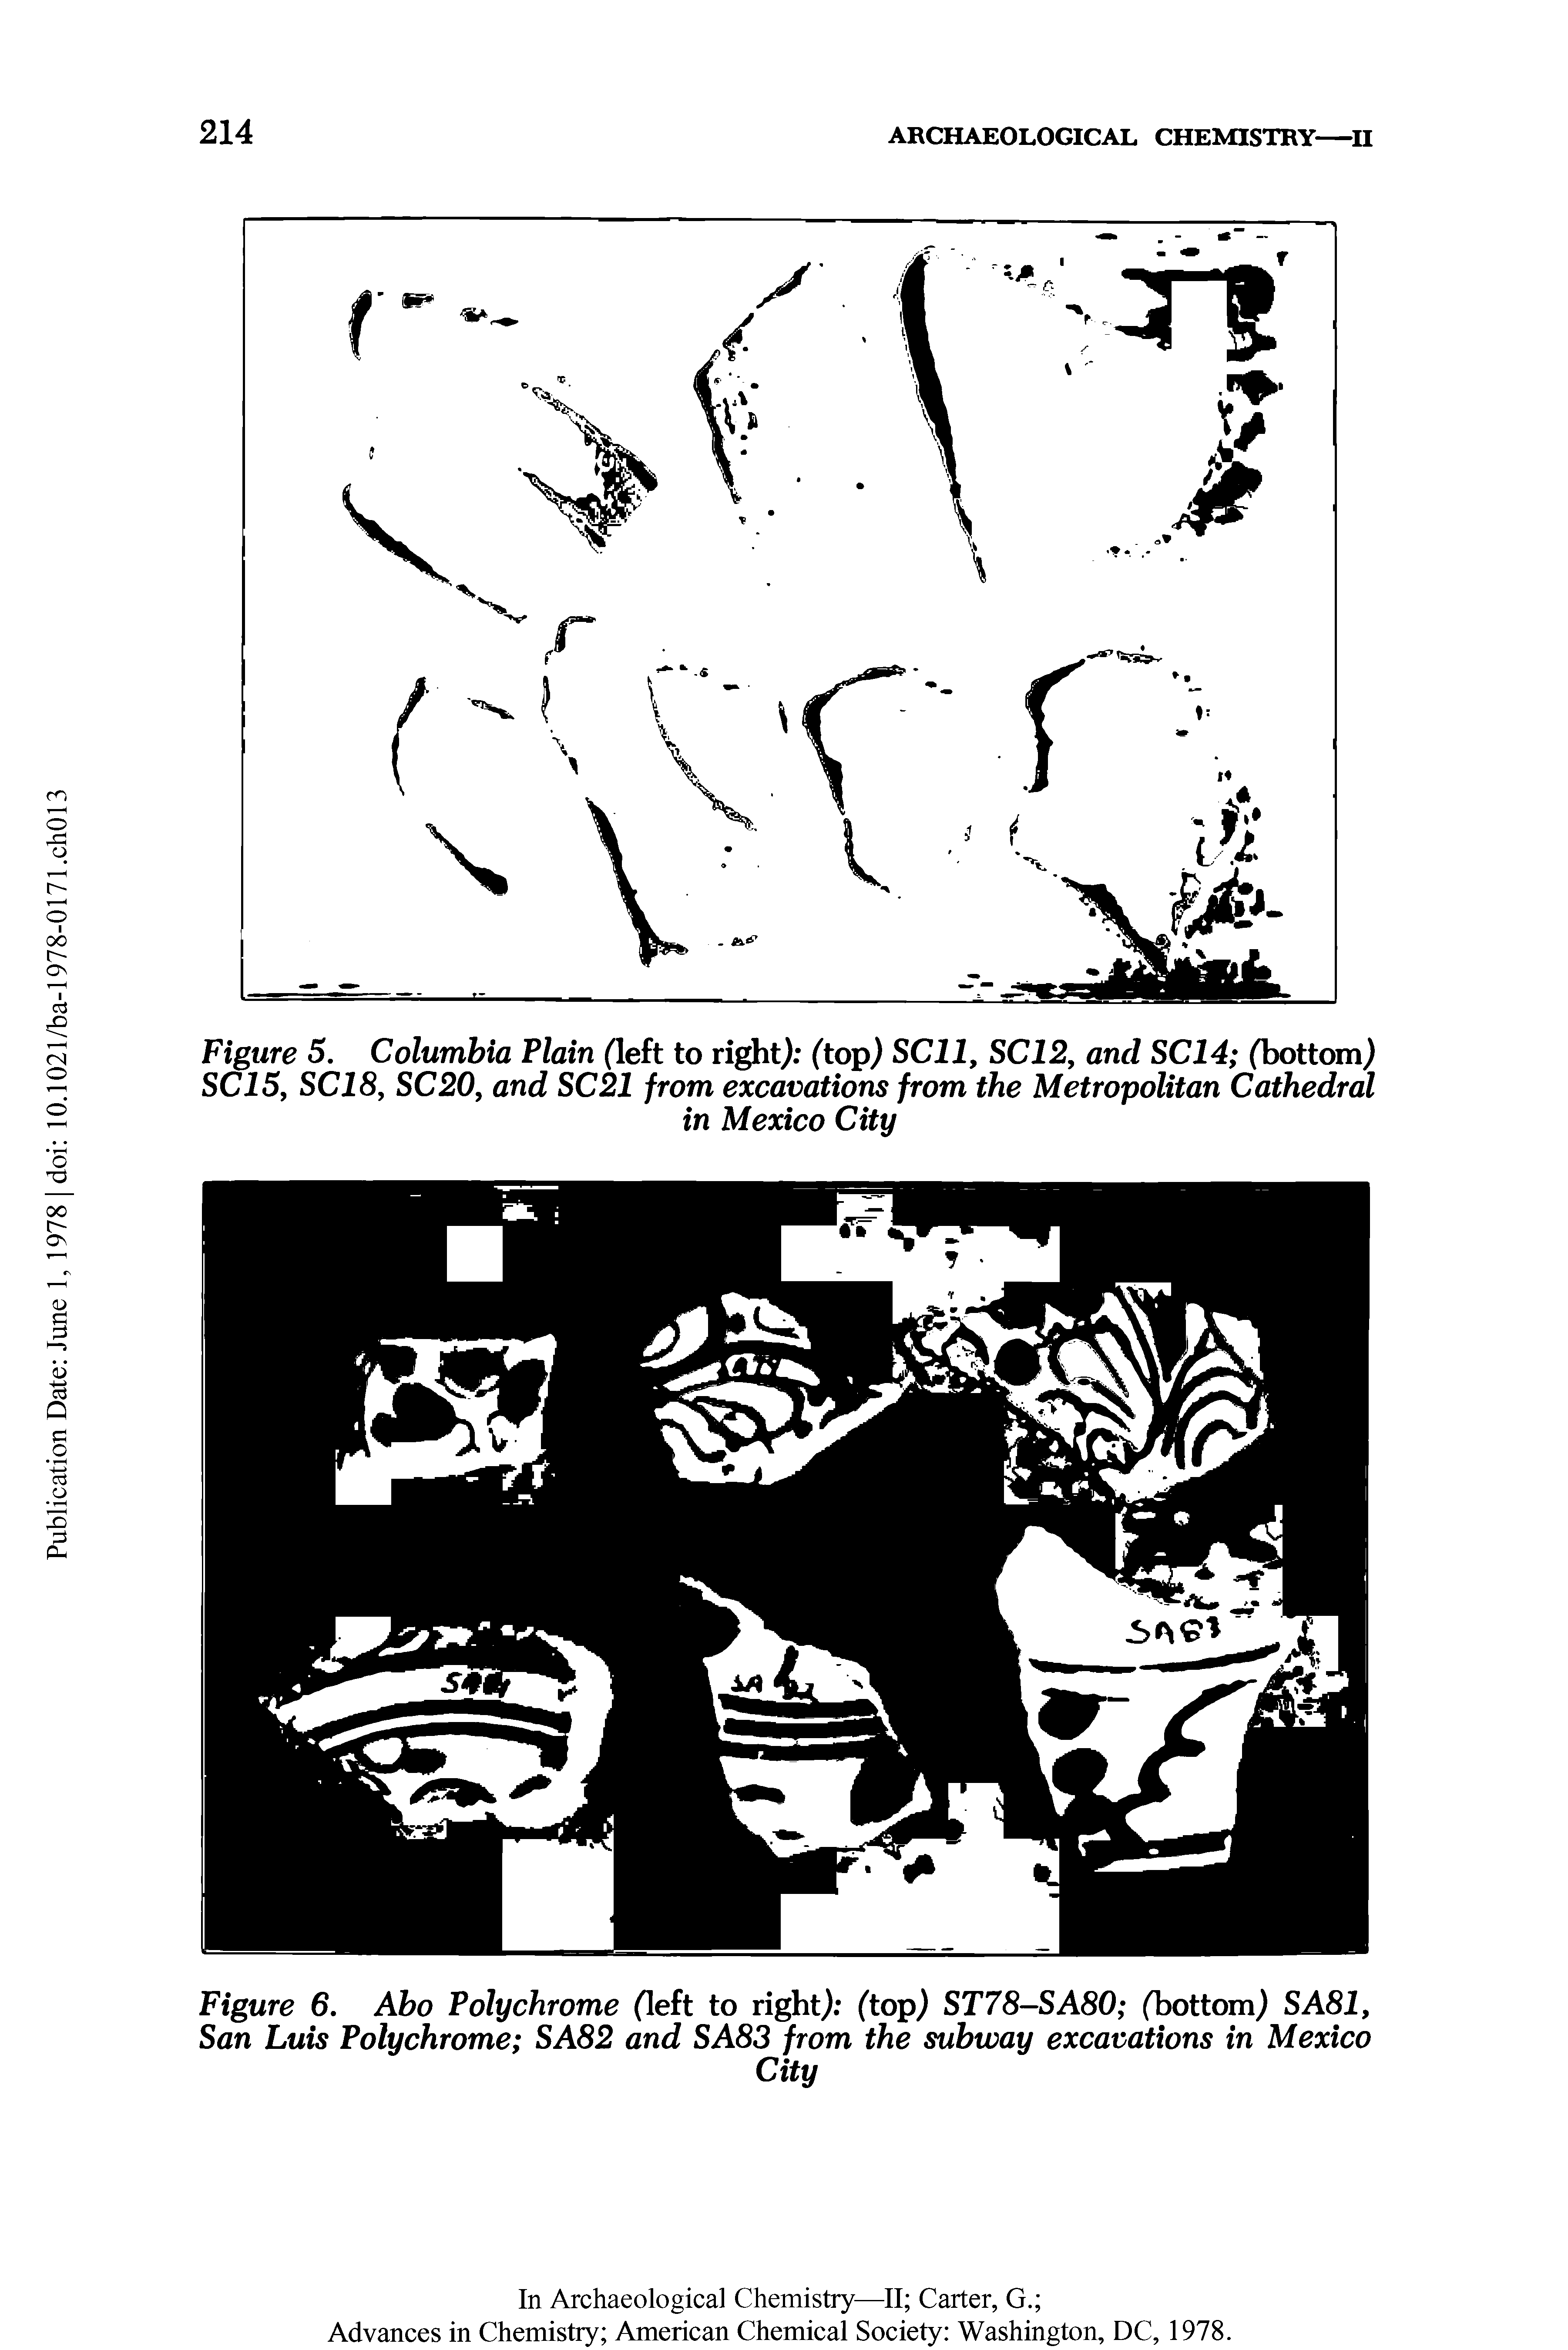 Figure 6. Abo Polychrome (left to right) (top) ST78-SA80 (bottom) SA81, San Luis Polychrome SA82 and SA83 from the subway excavations in Mexico...